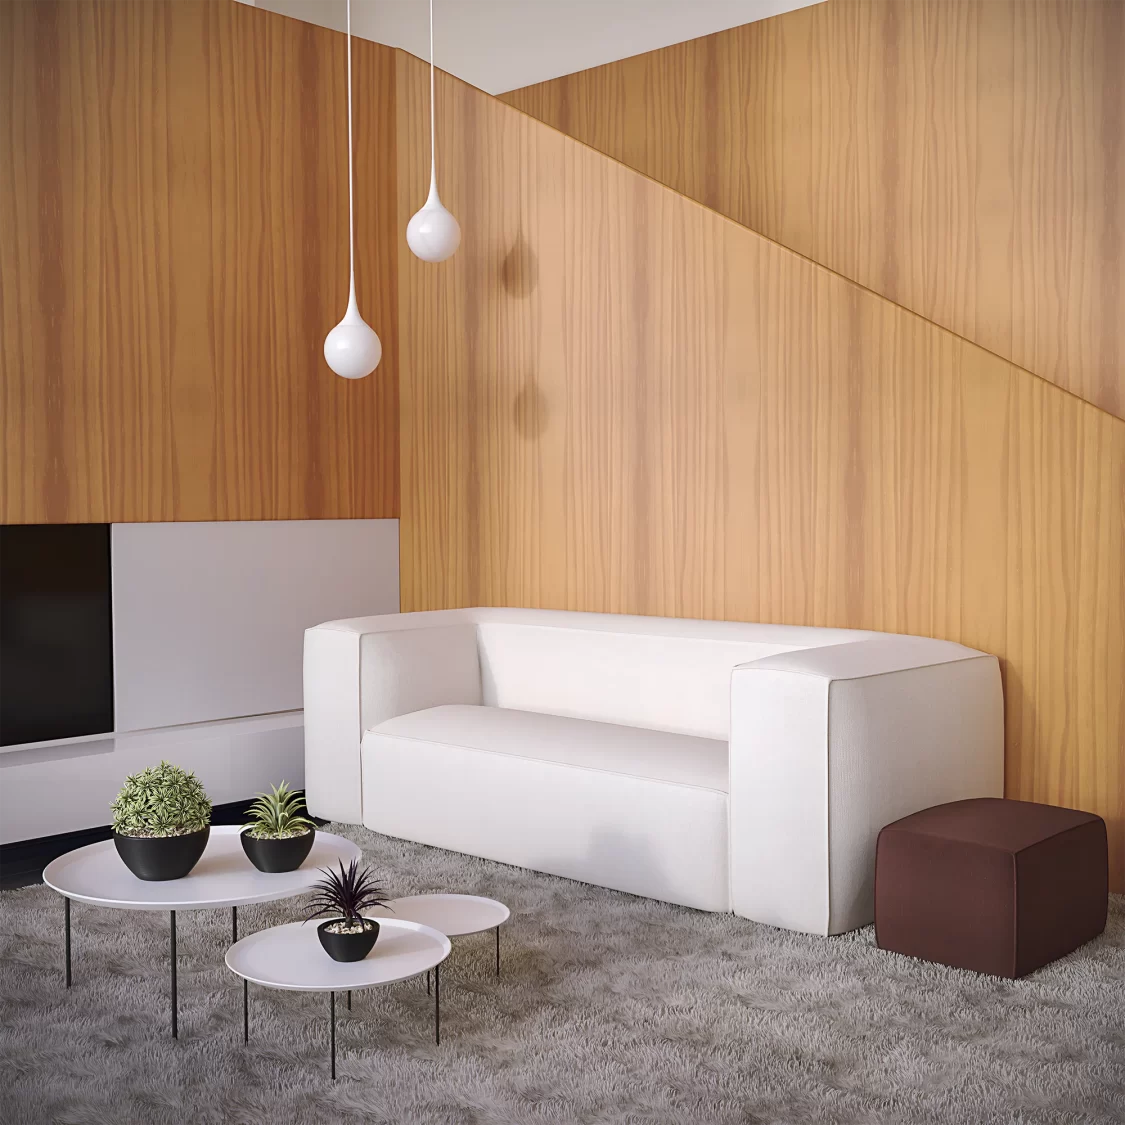 Vivid 3D Furniture Lifestyle Renderings: Setting the Scene"